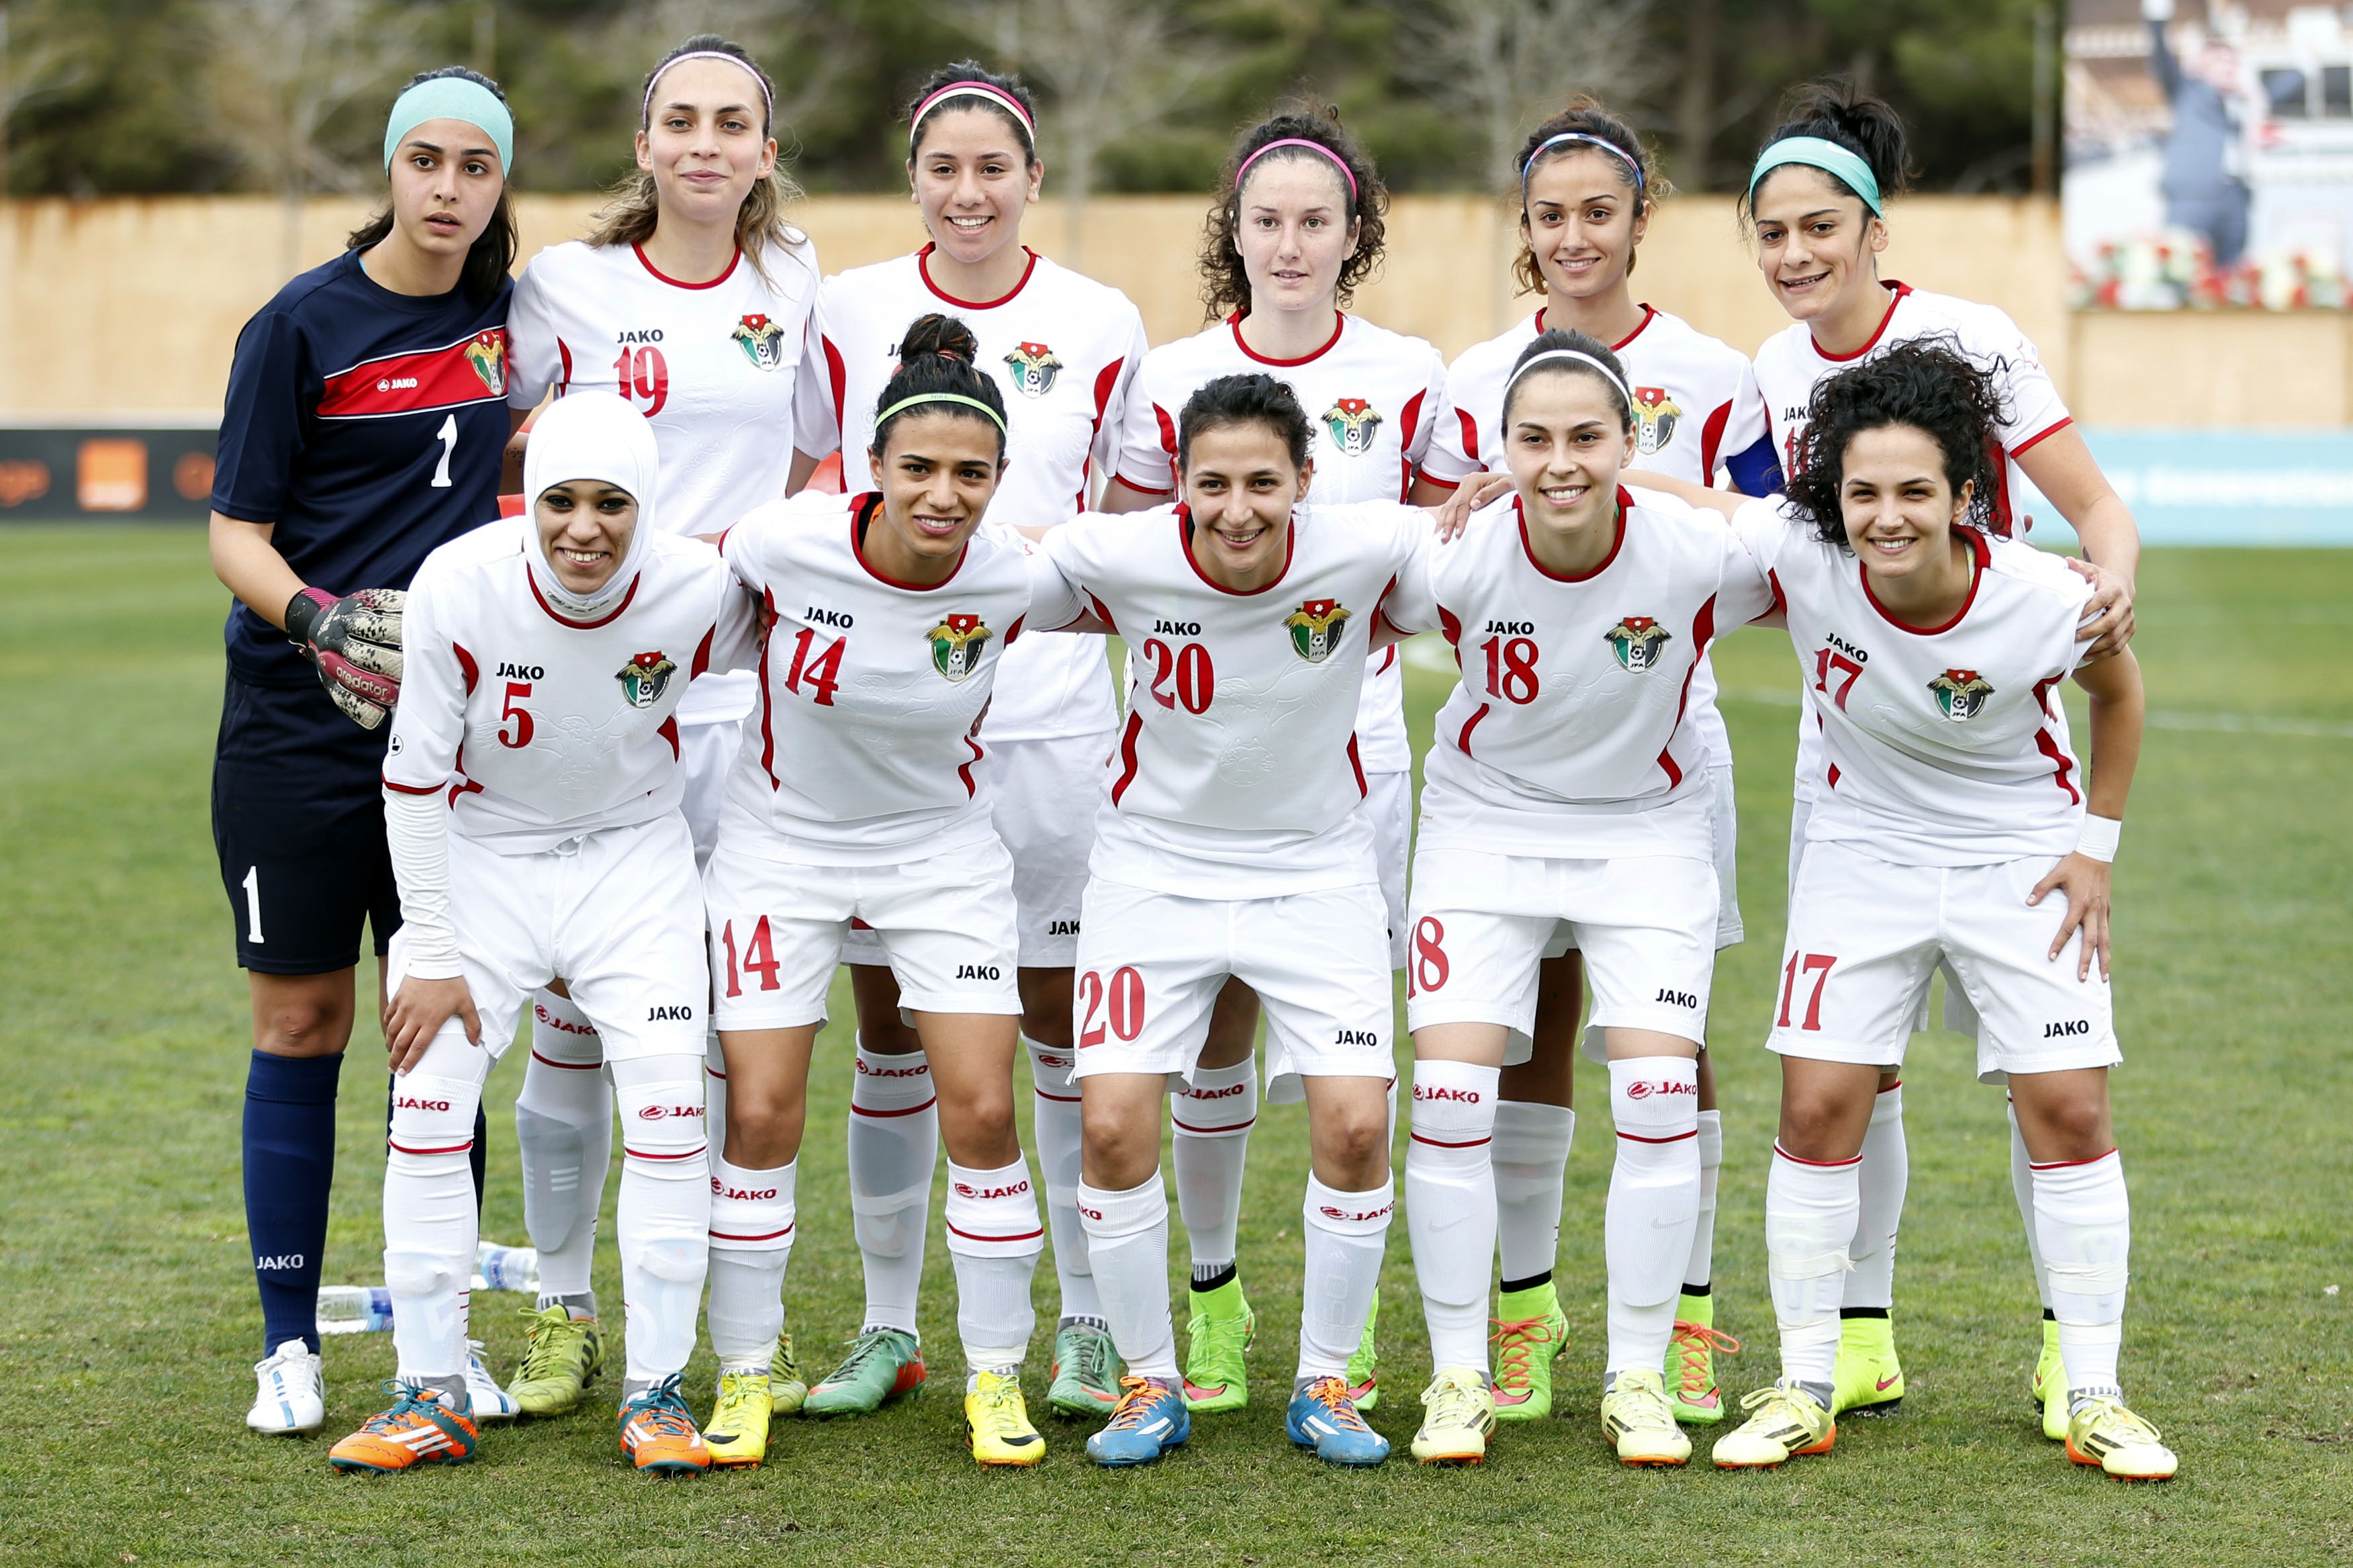 Five Arab teams to watch following England womens Euro win